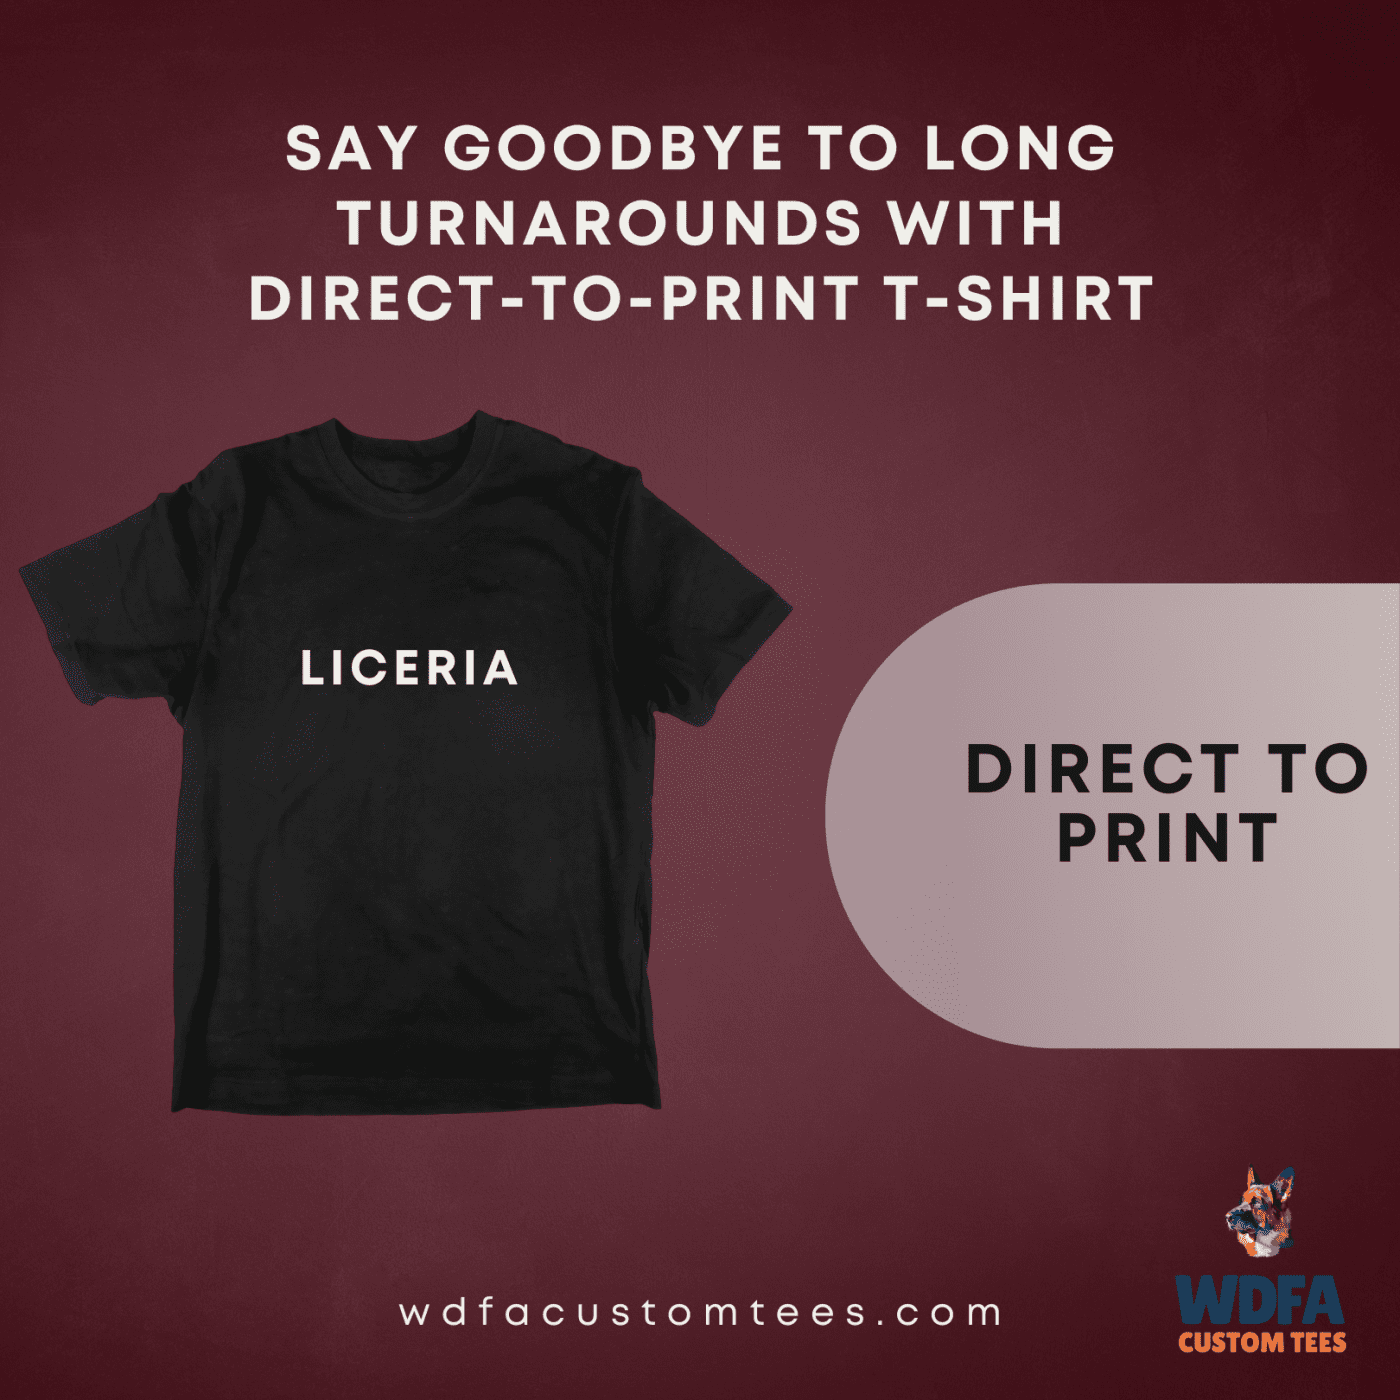 Say Goodbye to Long Turnarounds with Direct-to-Print T-Shirt, custom t-shirts, t-shirt printing, custom tshirts, tshirt printing, custom t shirts, t shirt printing